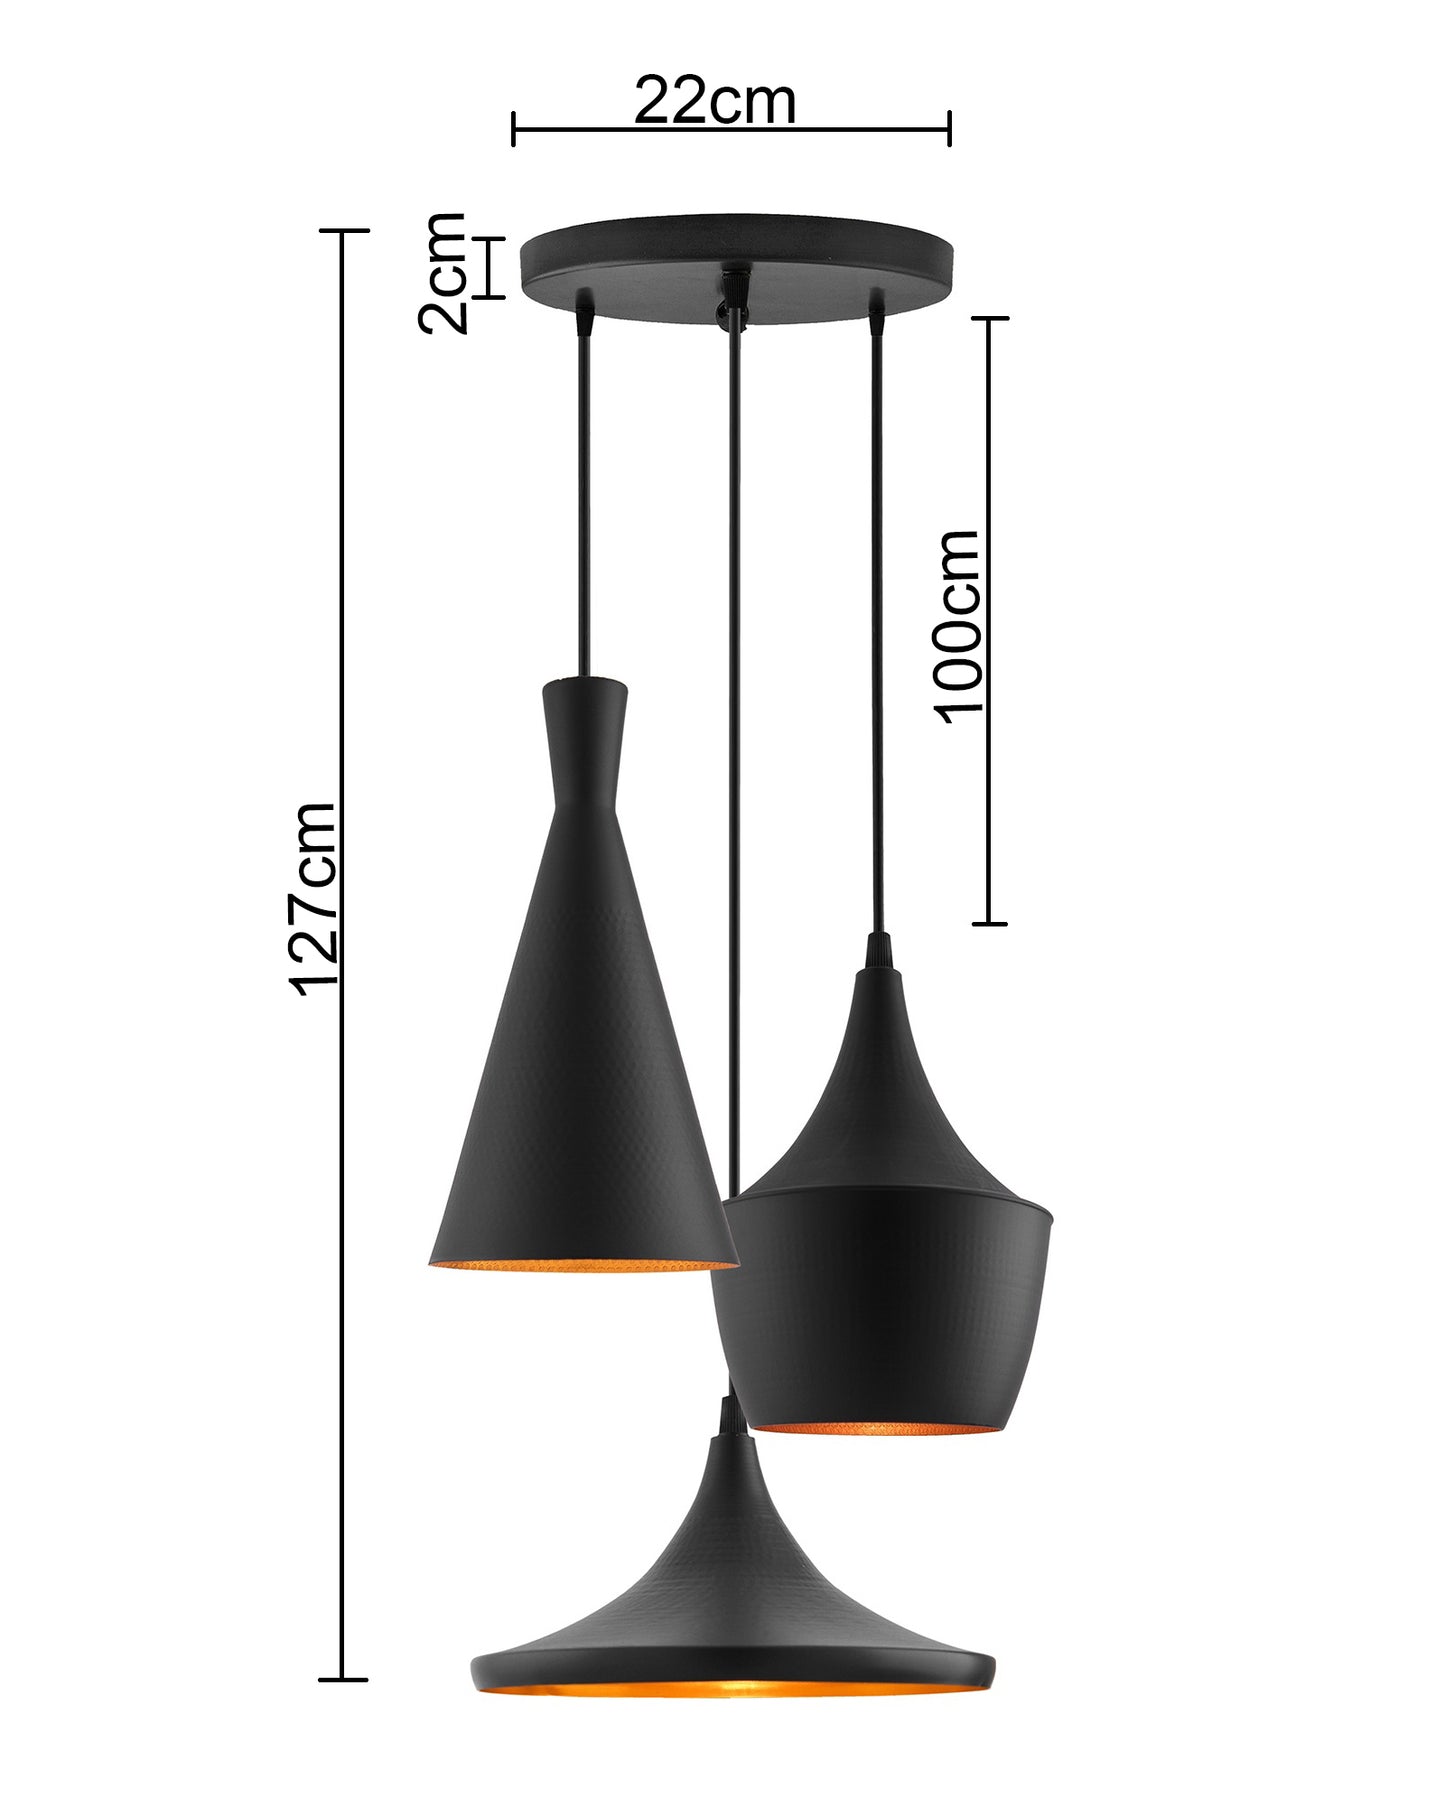 3-Lights Round Cluster Chandelier Modern Medium Tri-Nordic hanging Light, E27 Holder, Decorative, Black, URBAN Retro, Nordic Style, LED/Filament Bulb